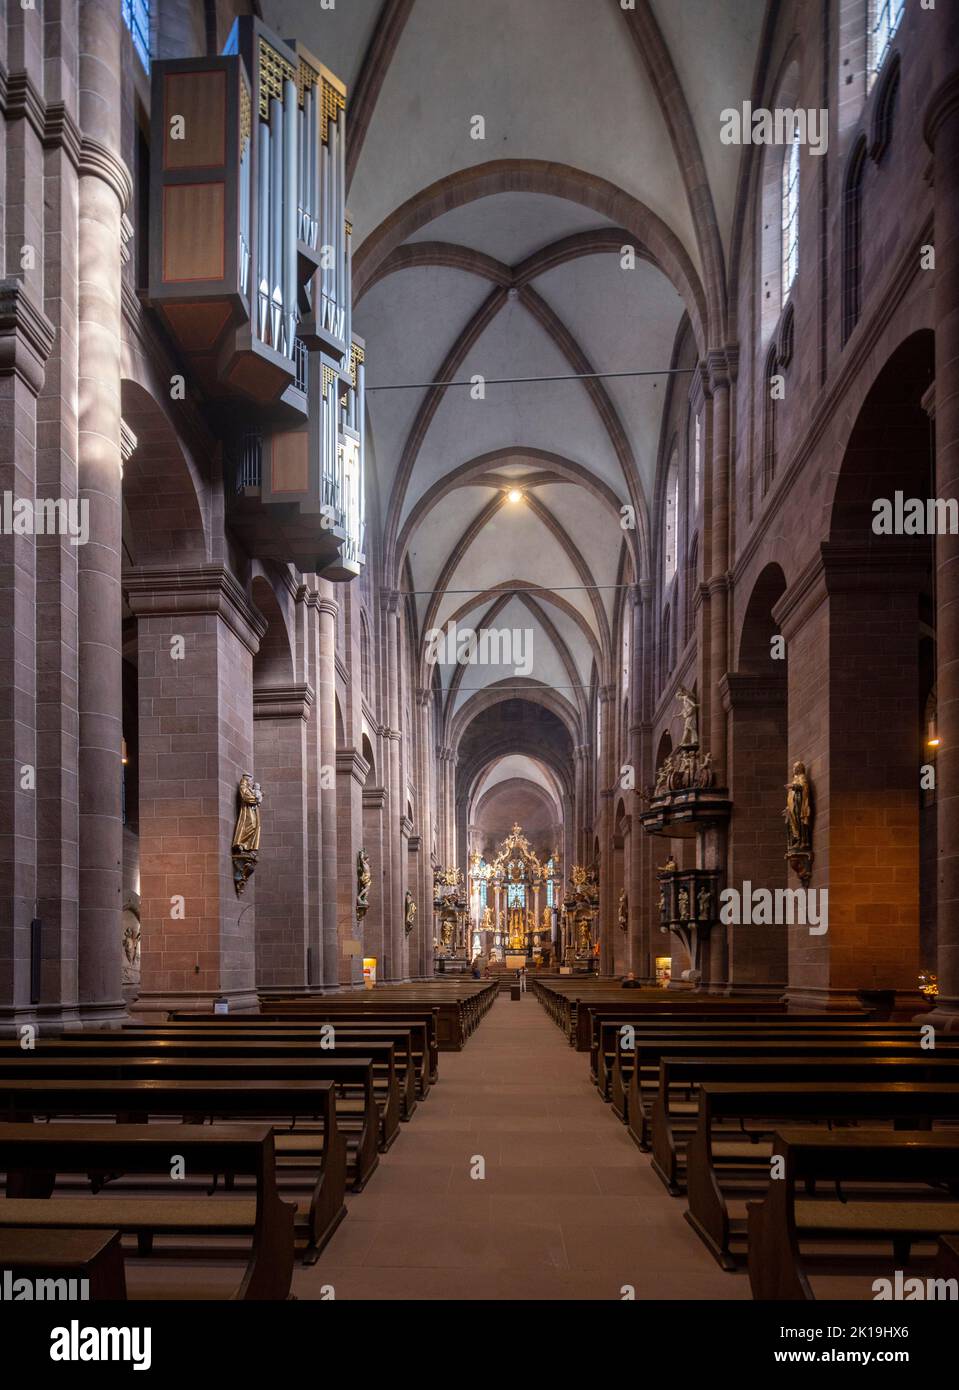 Nef, cathédrale Saint-Pierre, Wormser Dom, Worms, Rhénanie-Palatinat, Allemagne Banque D'Images